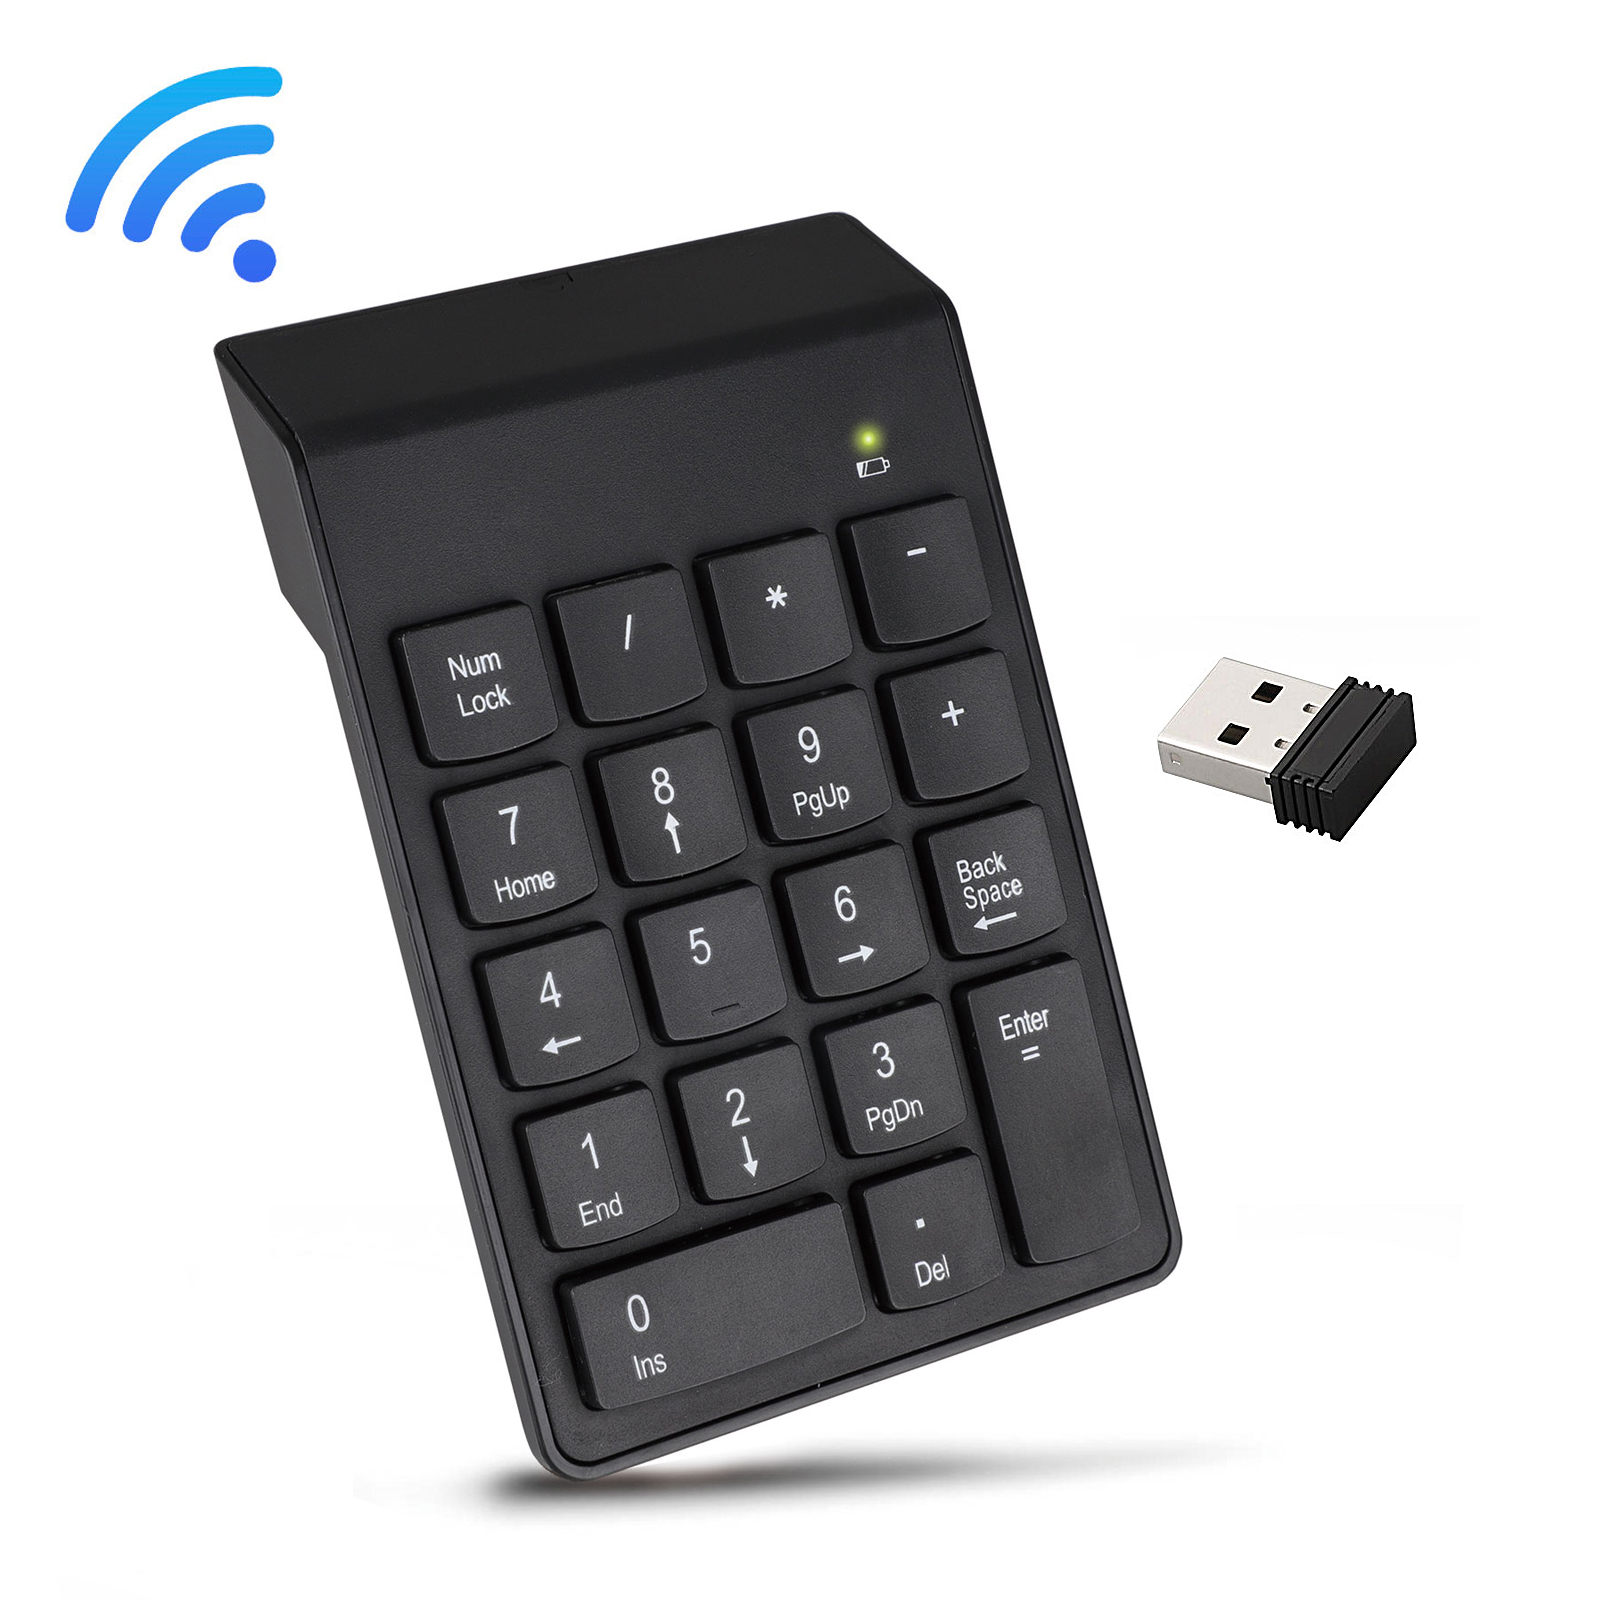 Wireless keyboard no numeric keypad